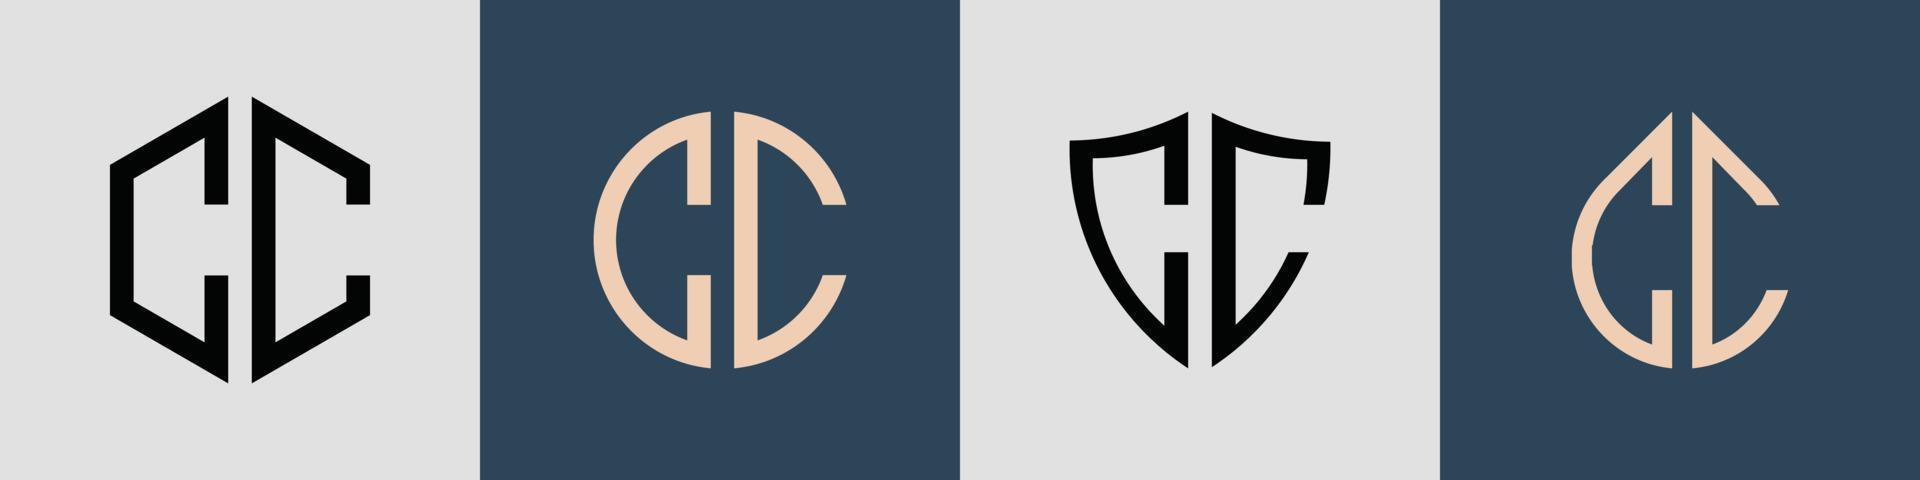 Creative simple Initial Letters CC Logo Designs Bundle. vector